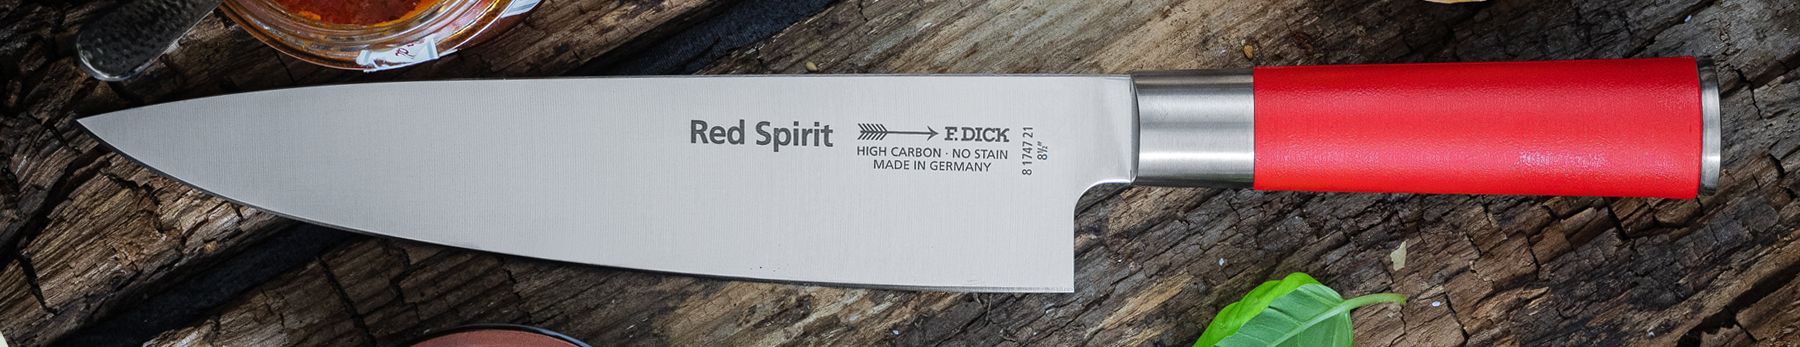 FDick red spirit chef knife